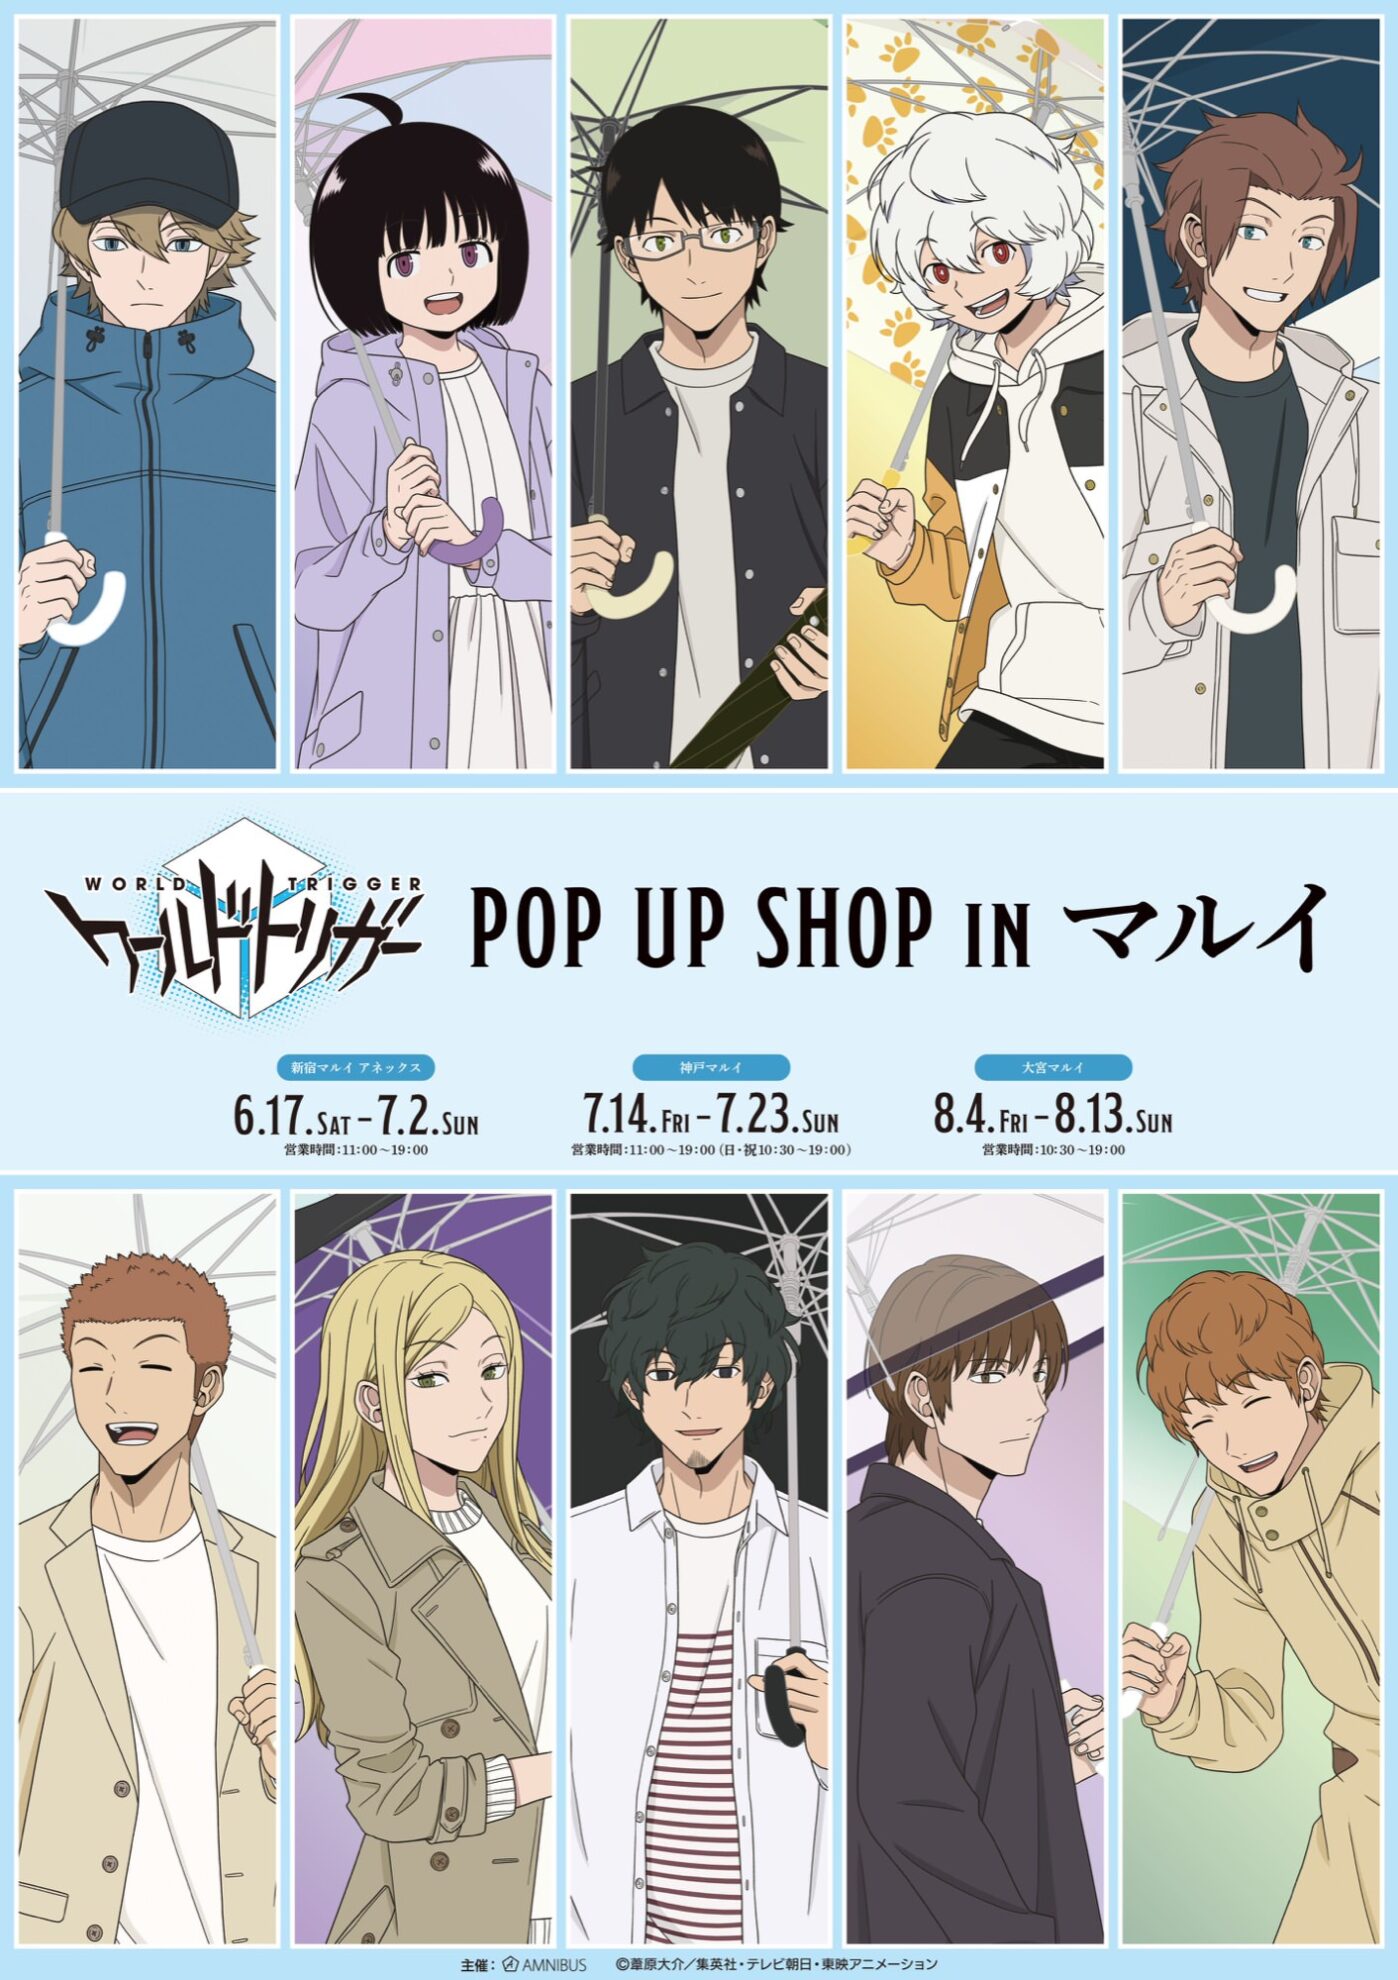 Tokyo, Saitama, Kobe! Anime “World Trigger” x AMNIBUS pop-up store! – Anime  Maps